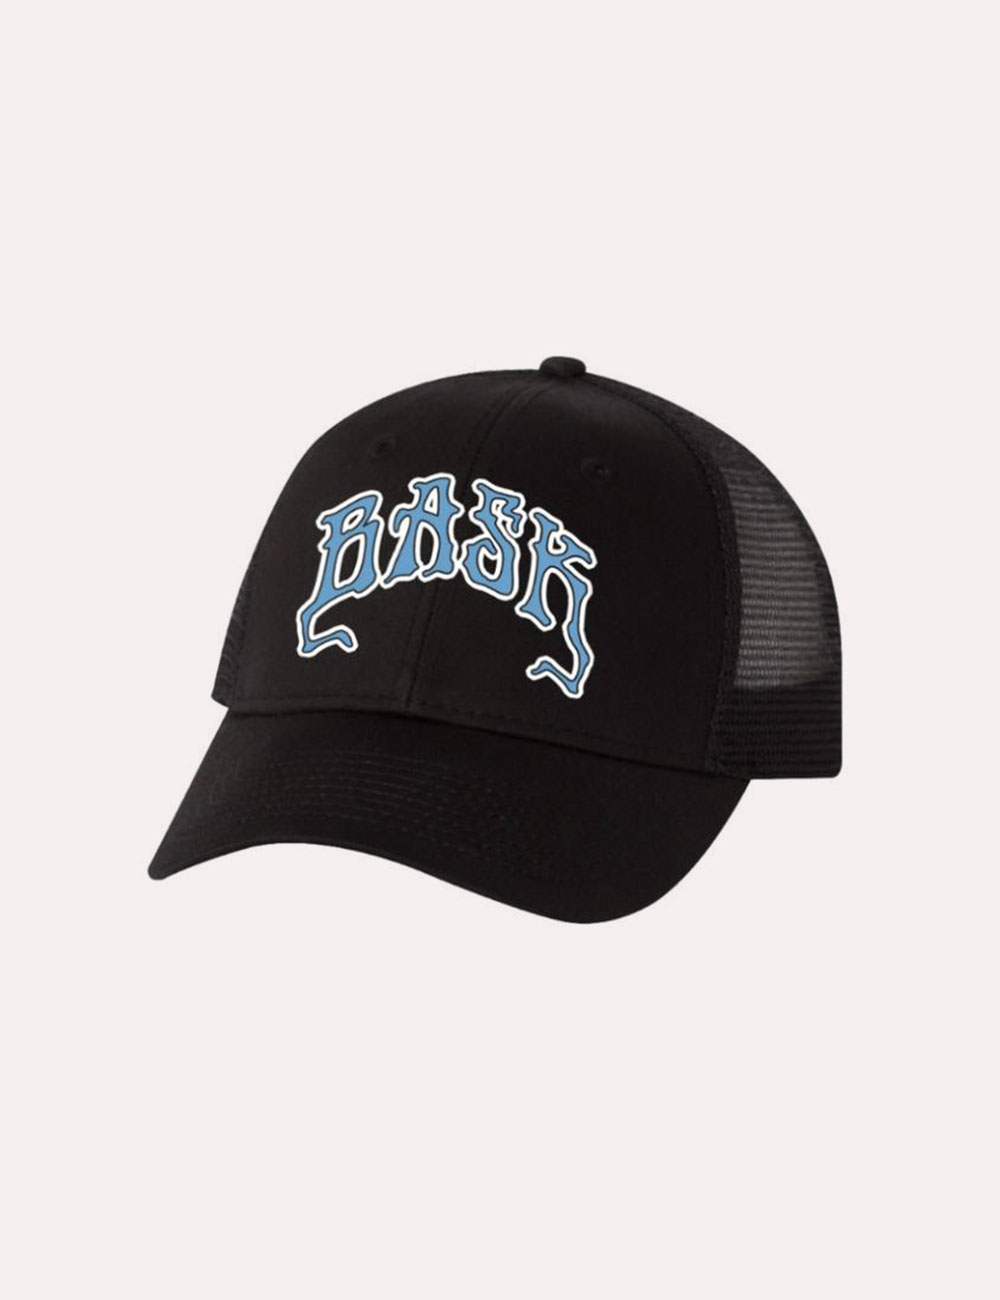 Bask - Accessories - Hats - Logo Trucker Hat in Black